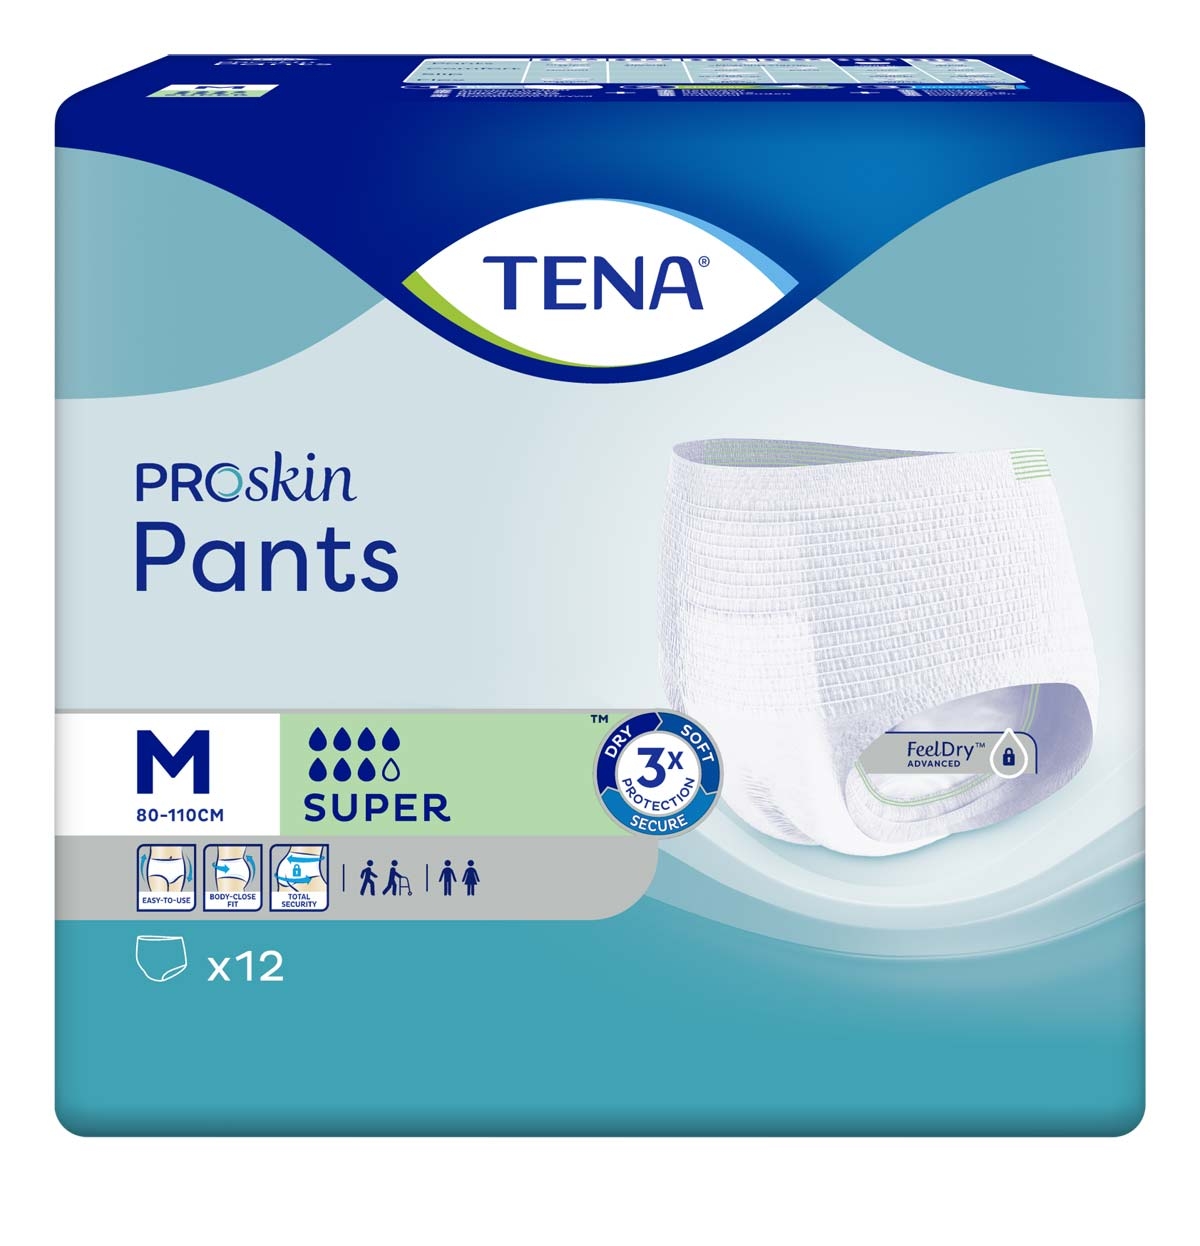 TENA Pants SUPER - saugstark - Medium (M) - 12 Stück Packung